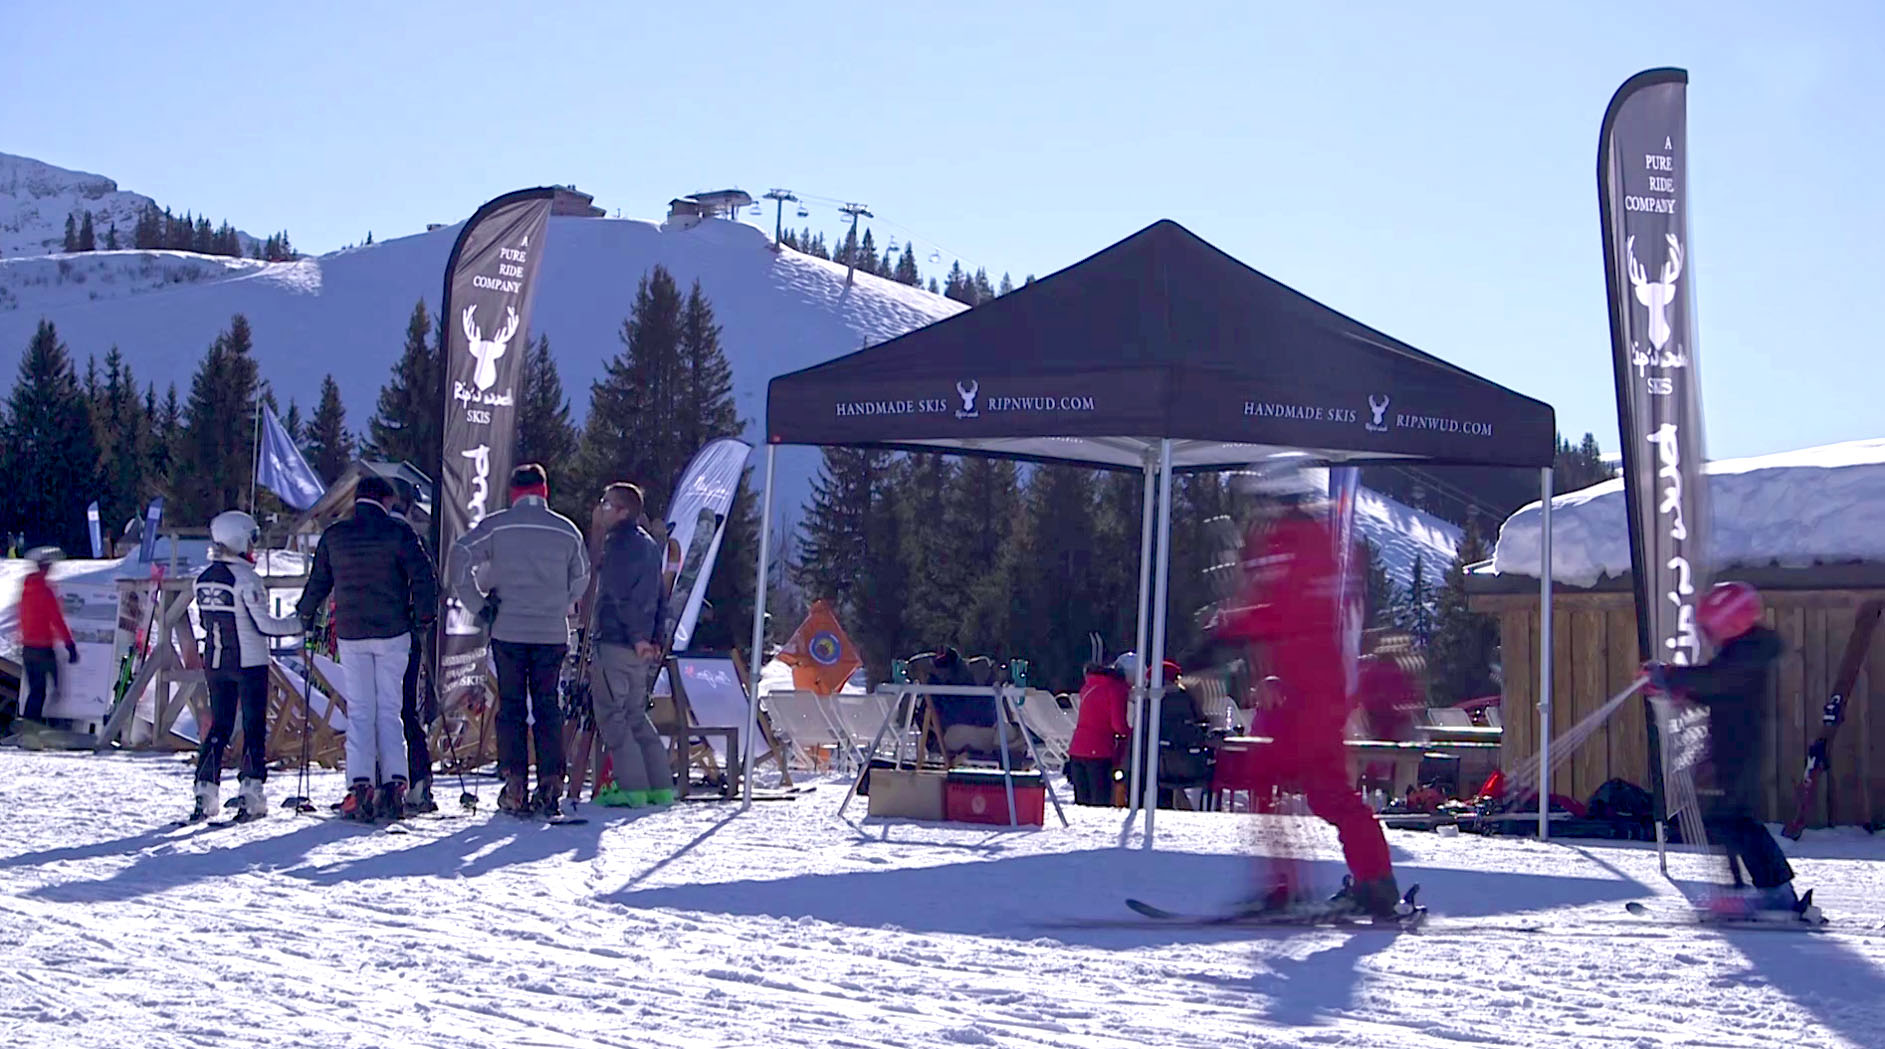 ripnwud handmade woodcore eco skis free ski test tour megeve all season test center1